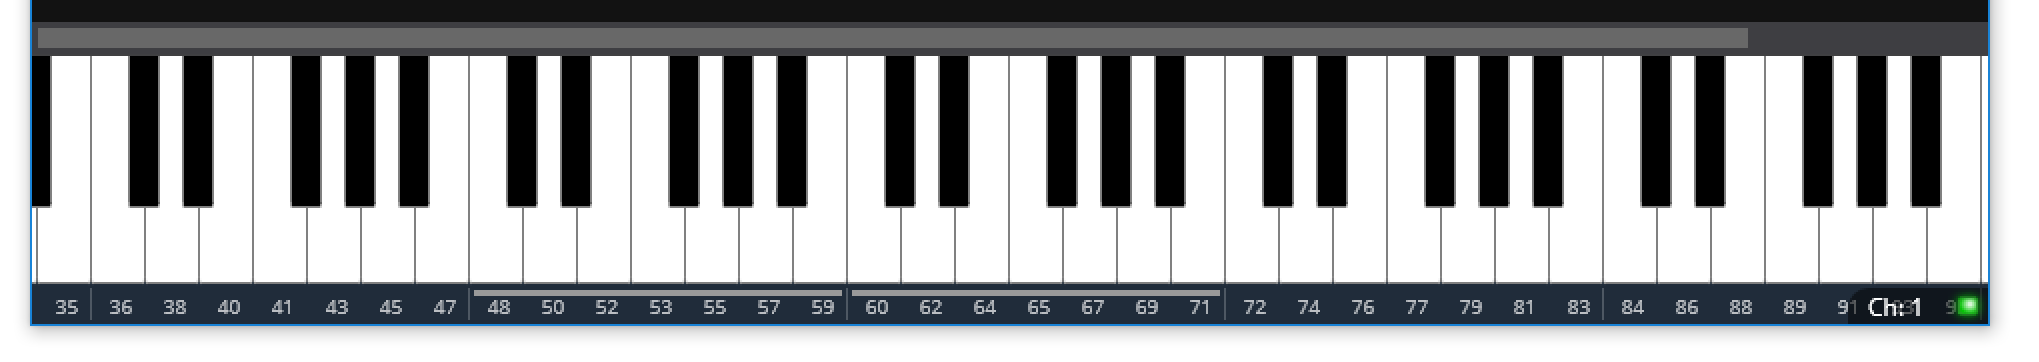 Keyboard MIDI Note Numbers